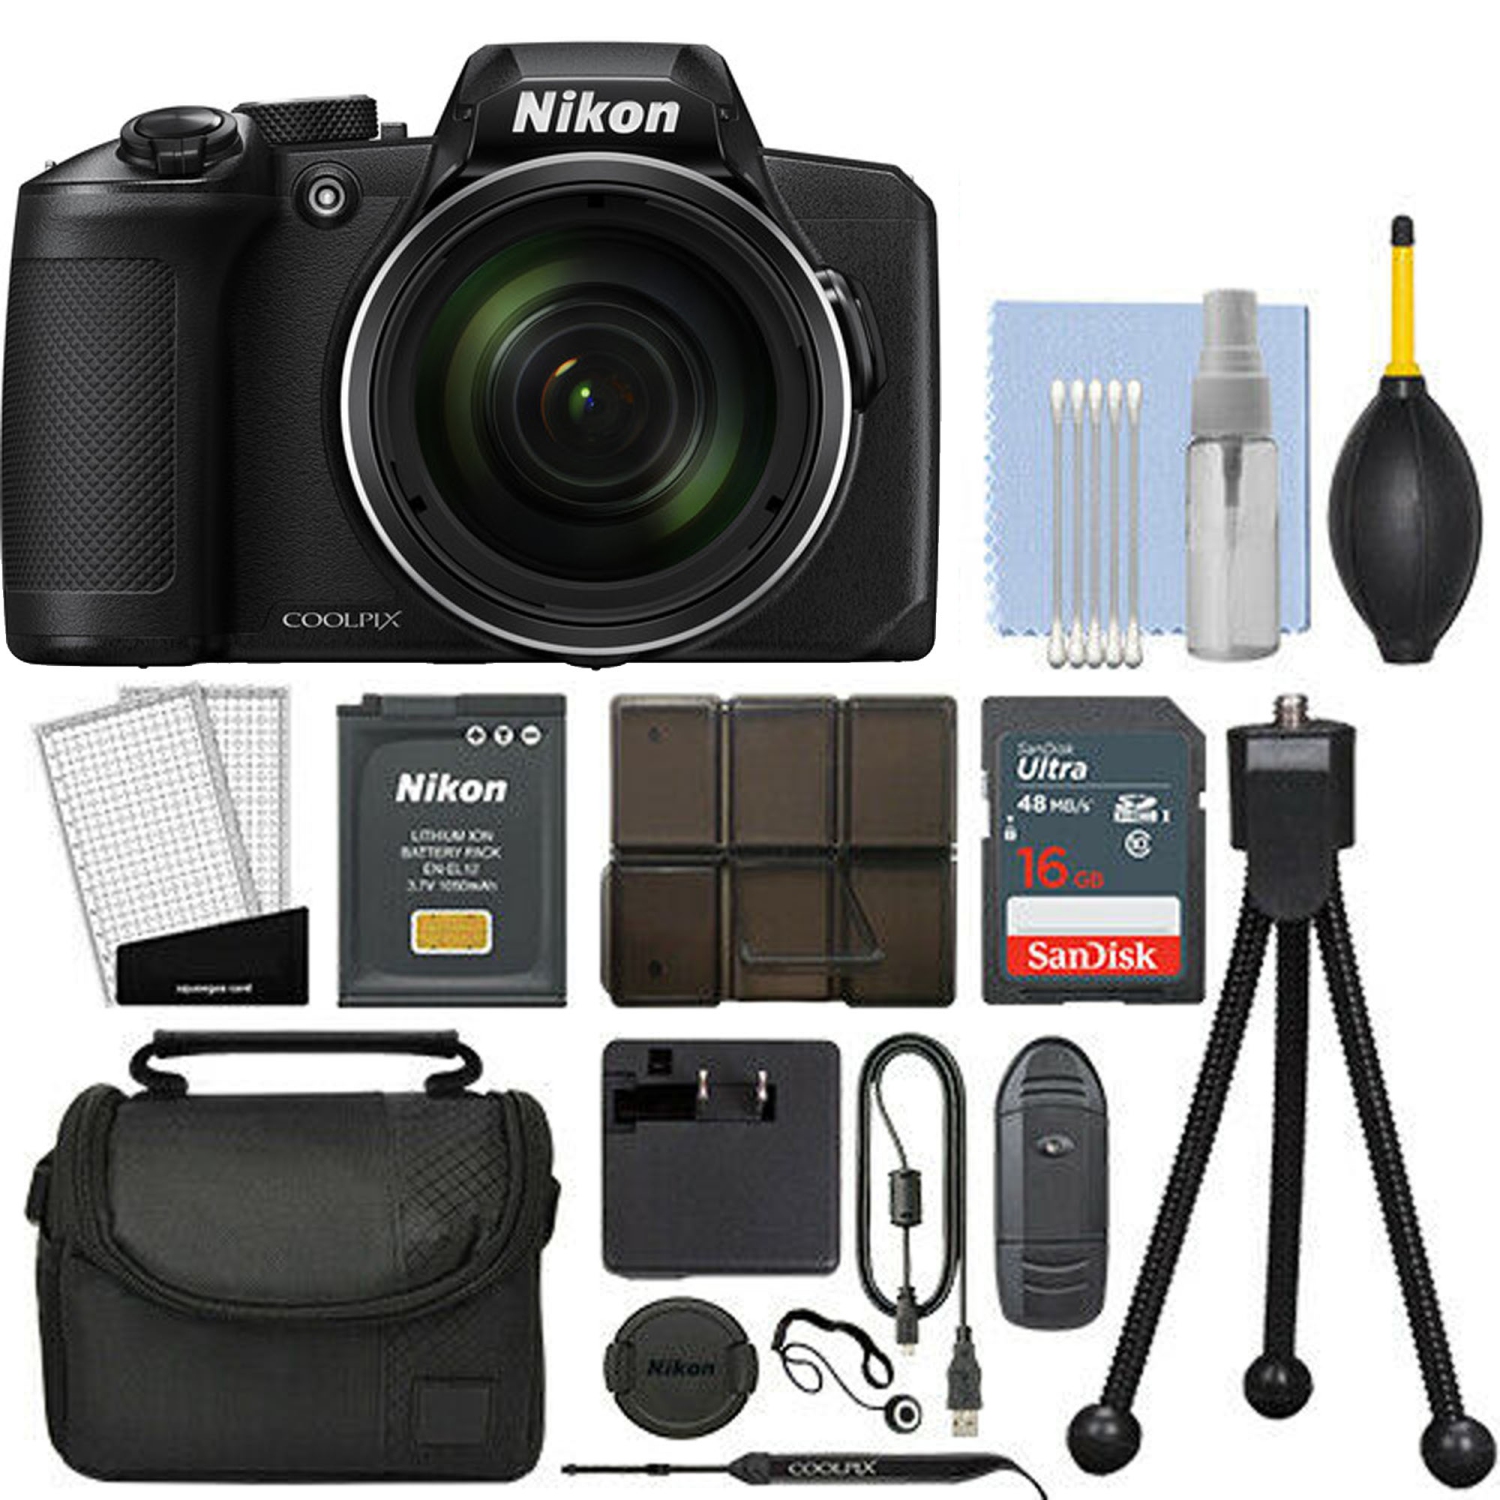 Nikon COOLPIX B600 Digital Camera (Black) with 16GB Memory Card Starter Package - US Version w/ Seller Warranty